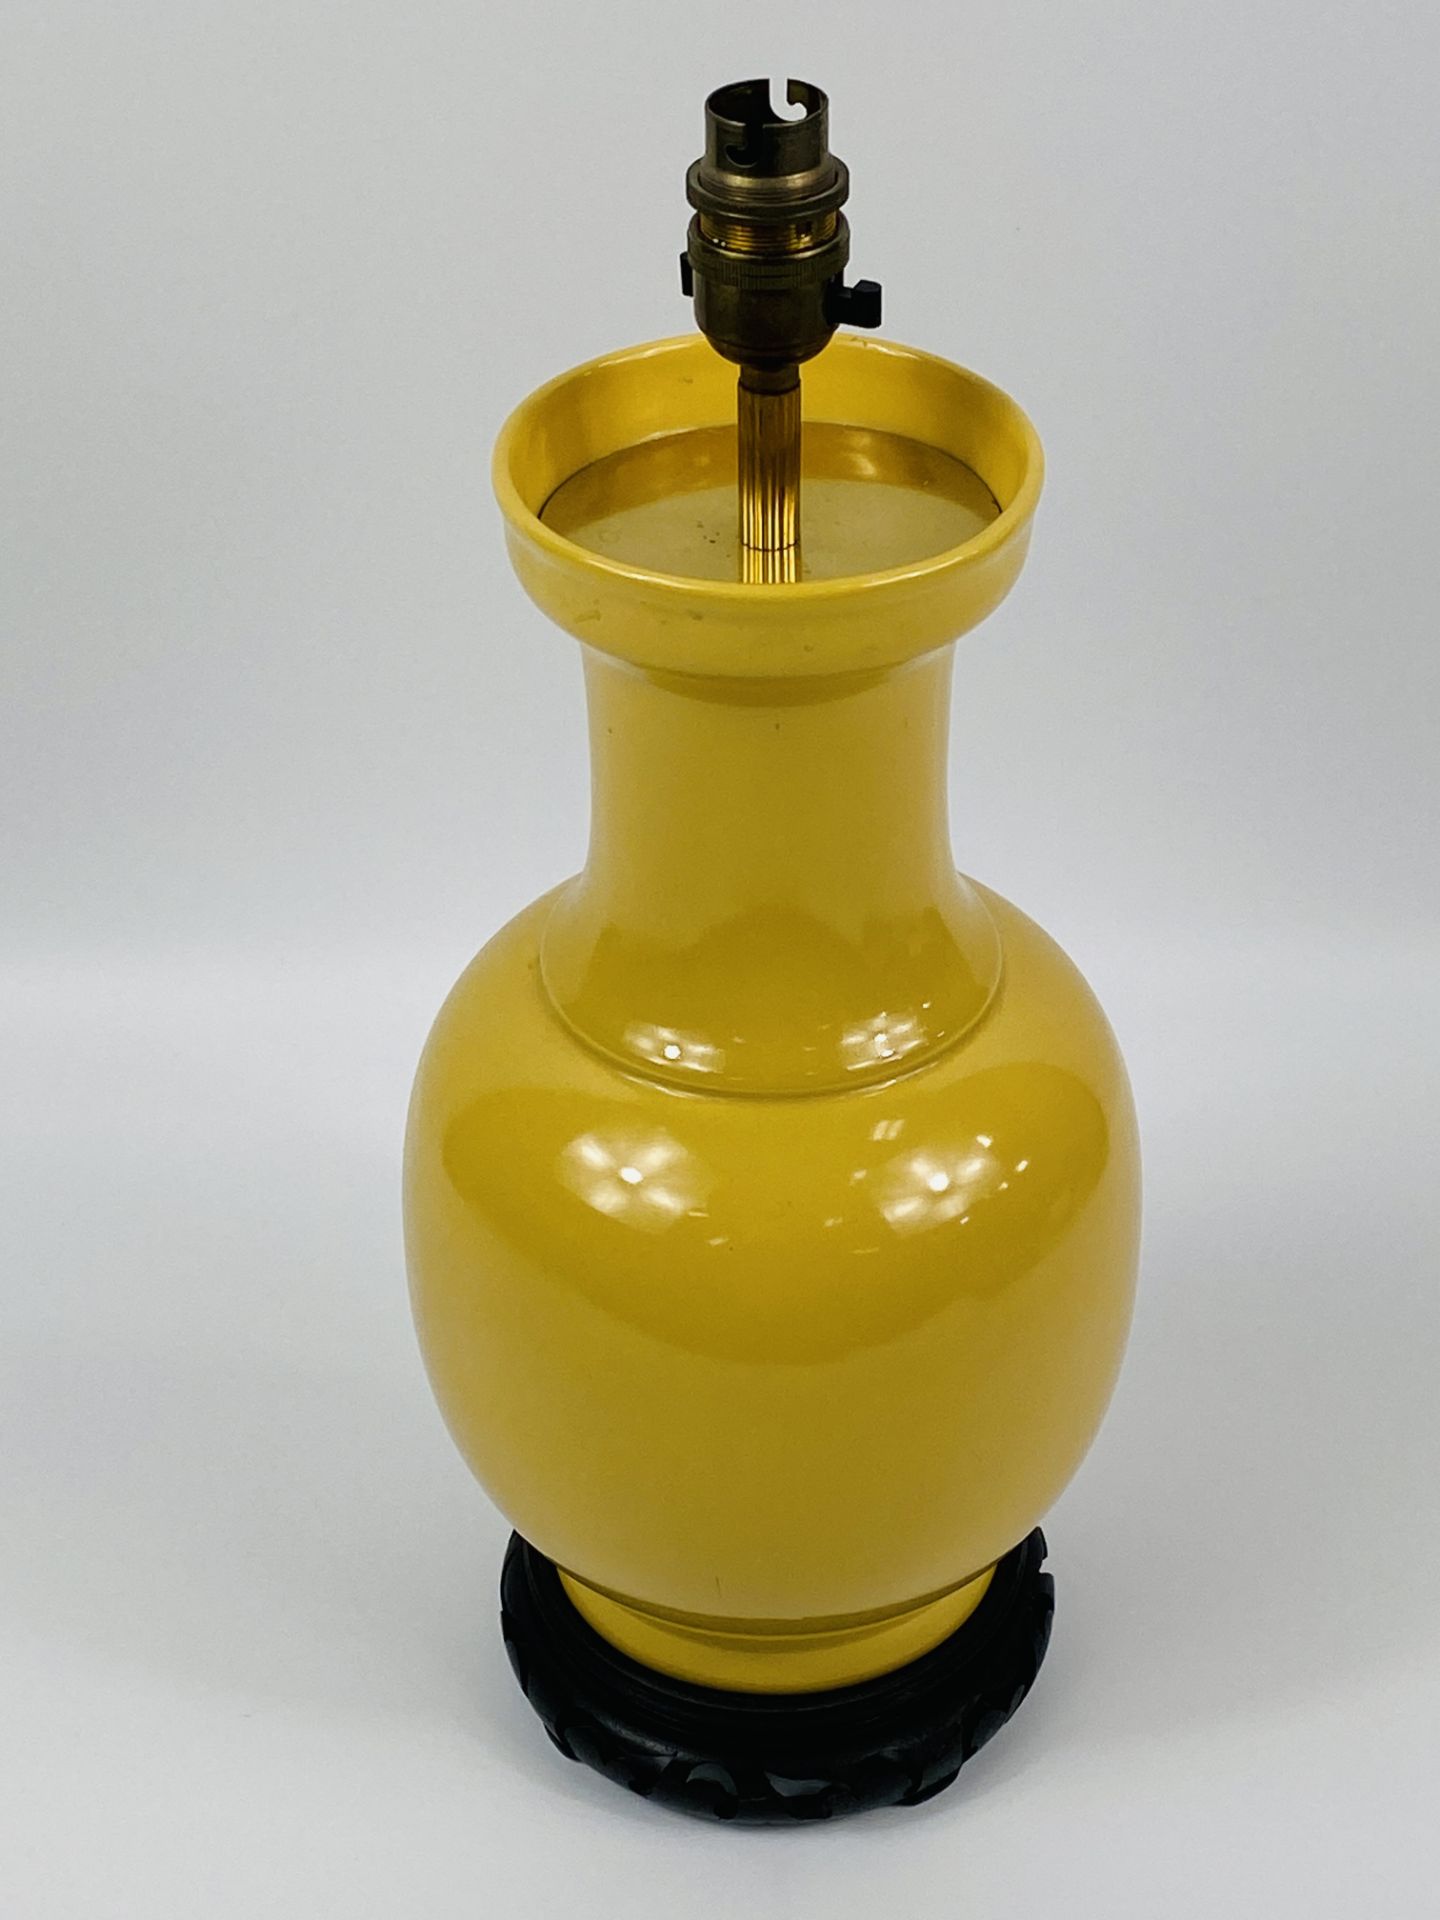 Oriental style ceramic table lamp on wood base - Image 5 of 5